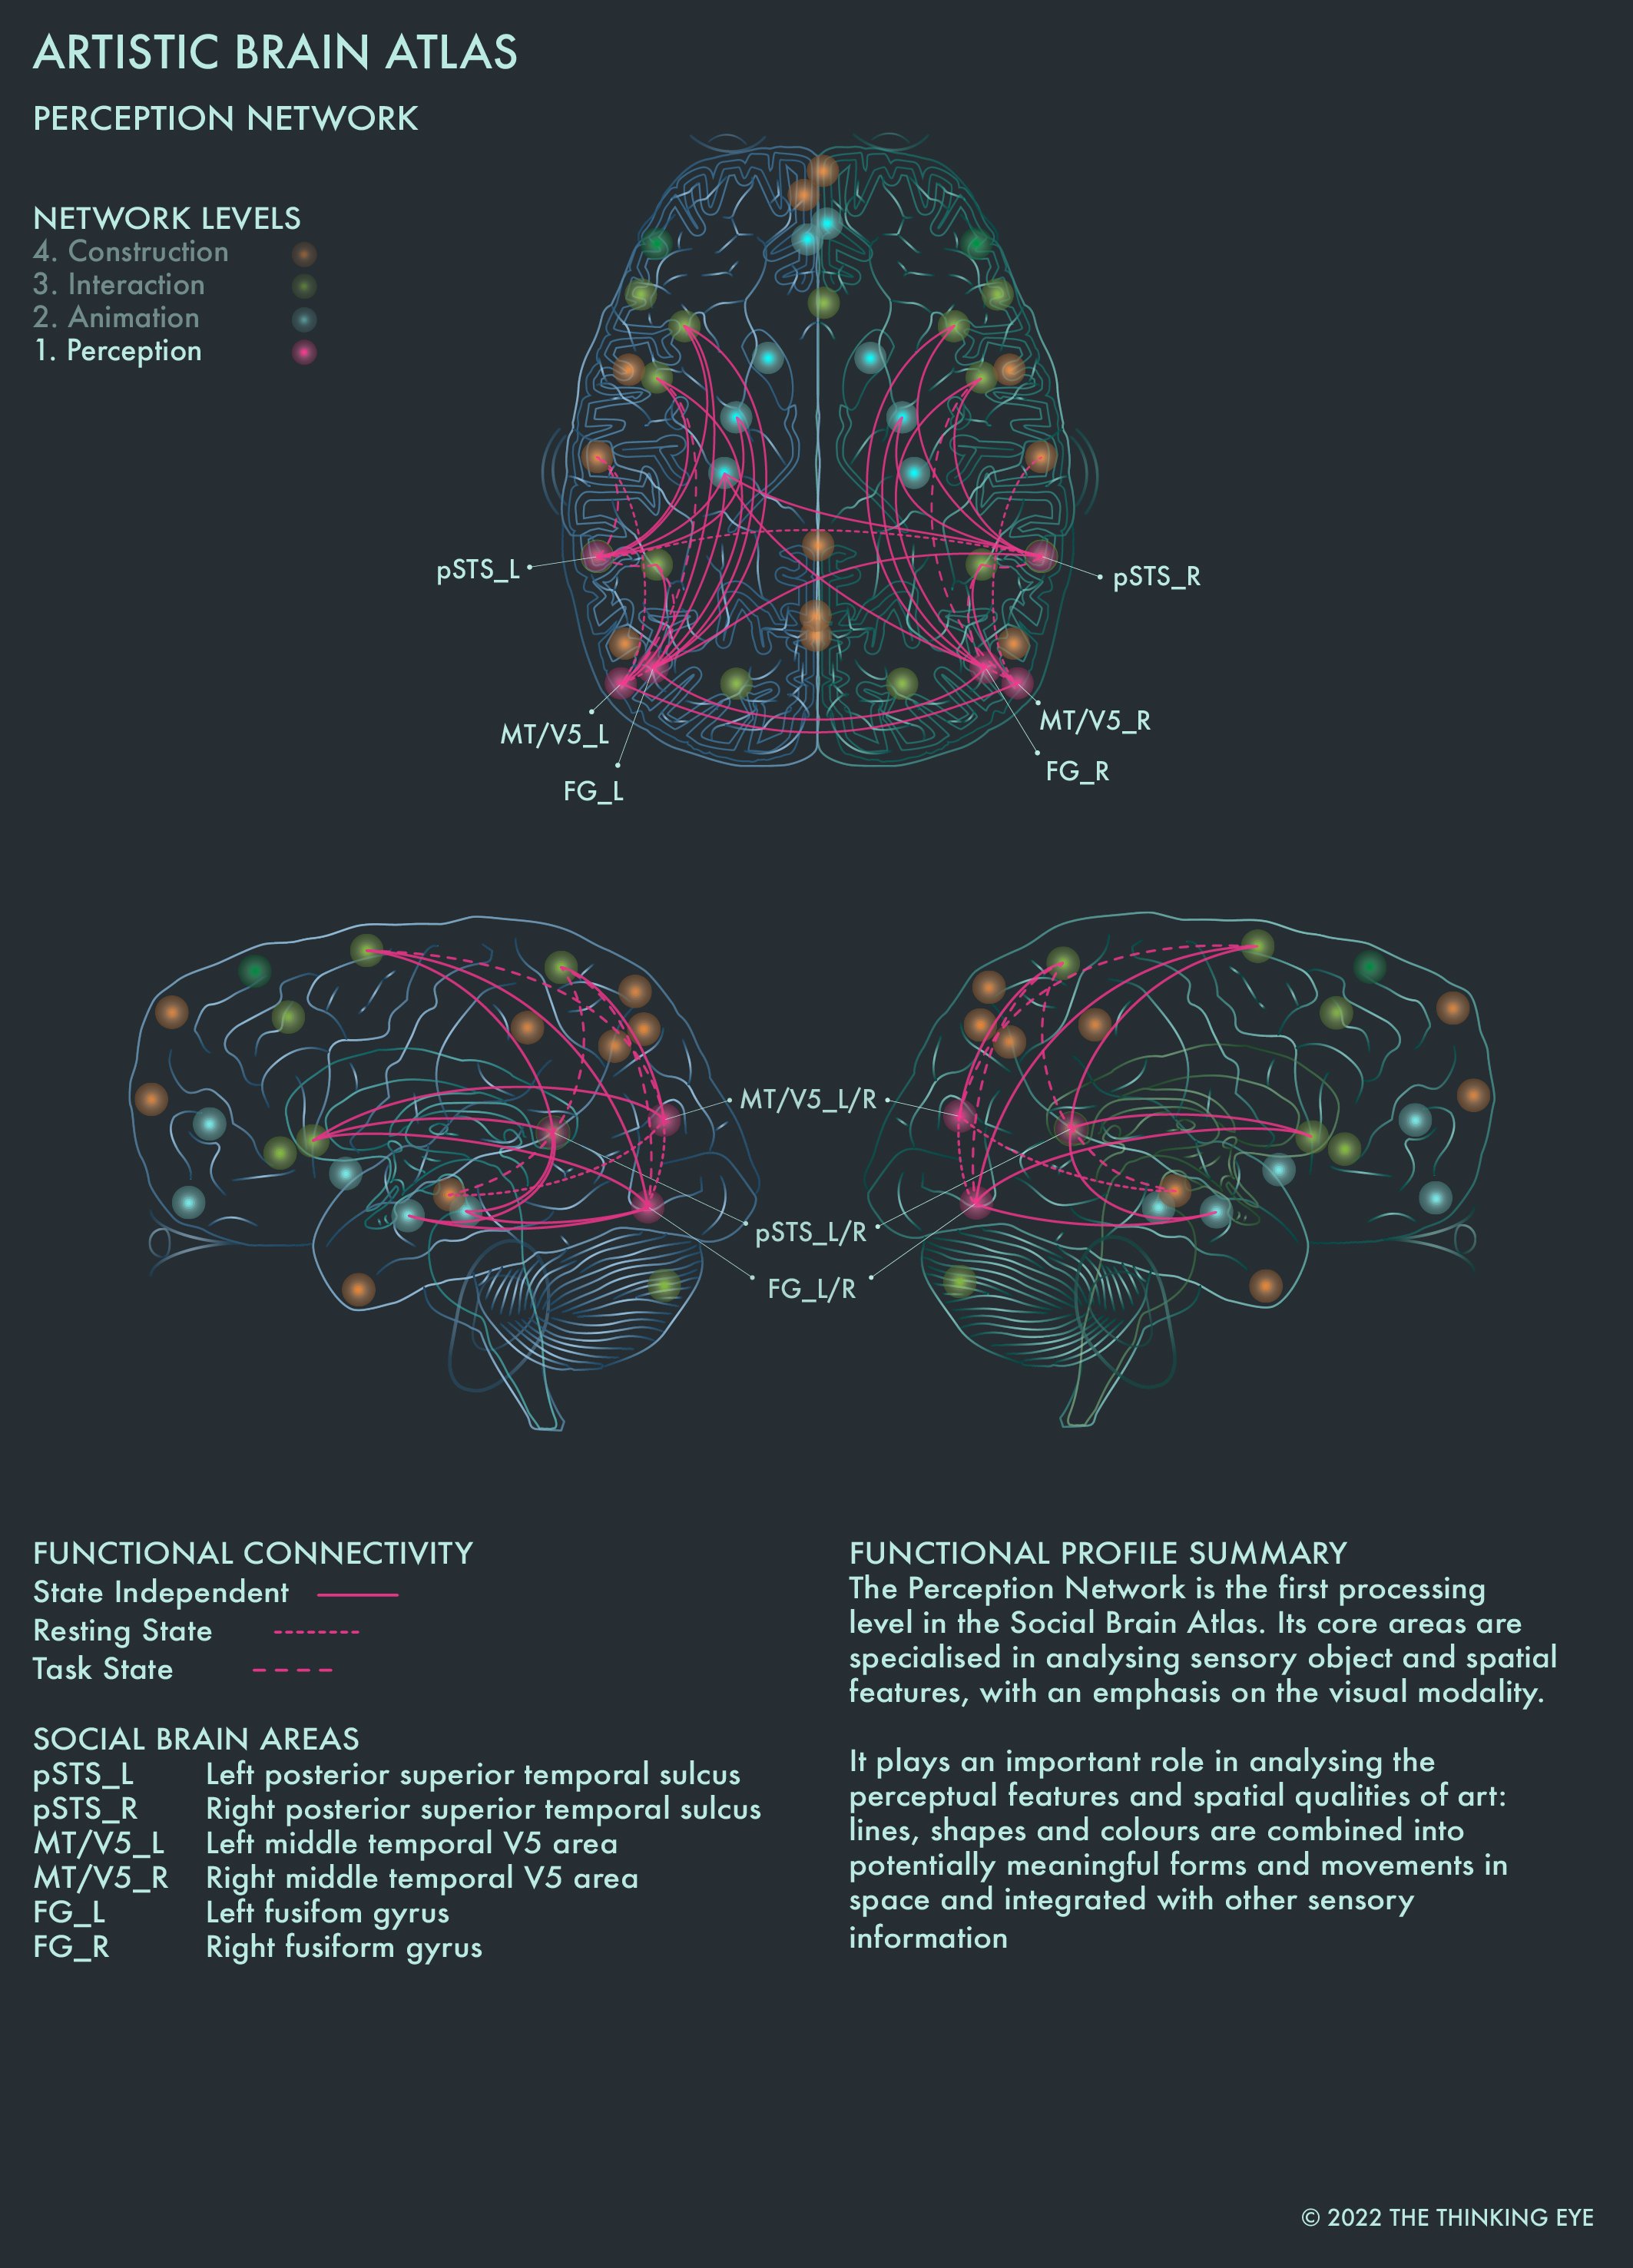 01 PN_Artistic Brain Atlas_Overview Social Brain Atlas.jpg